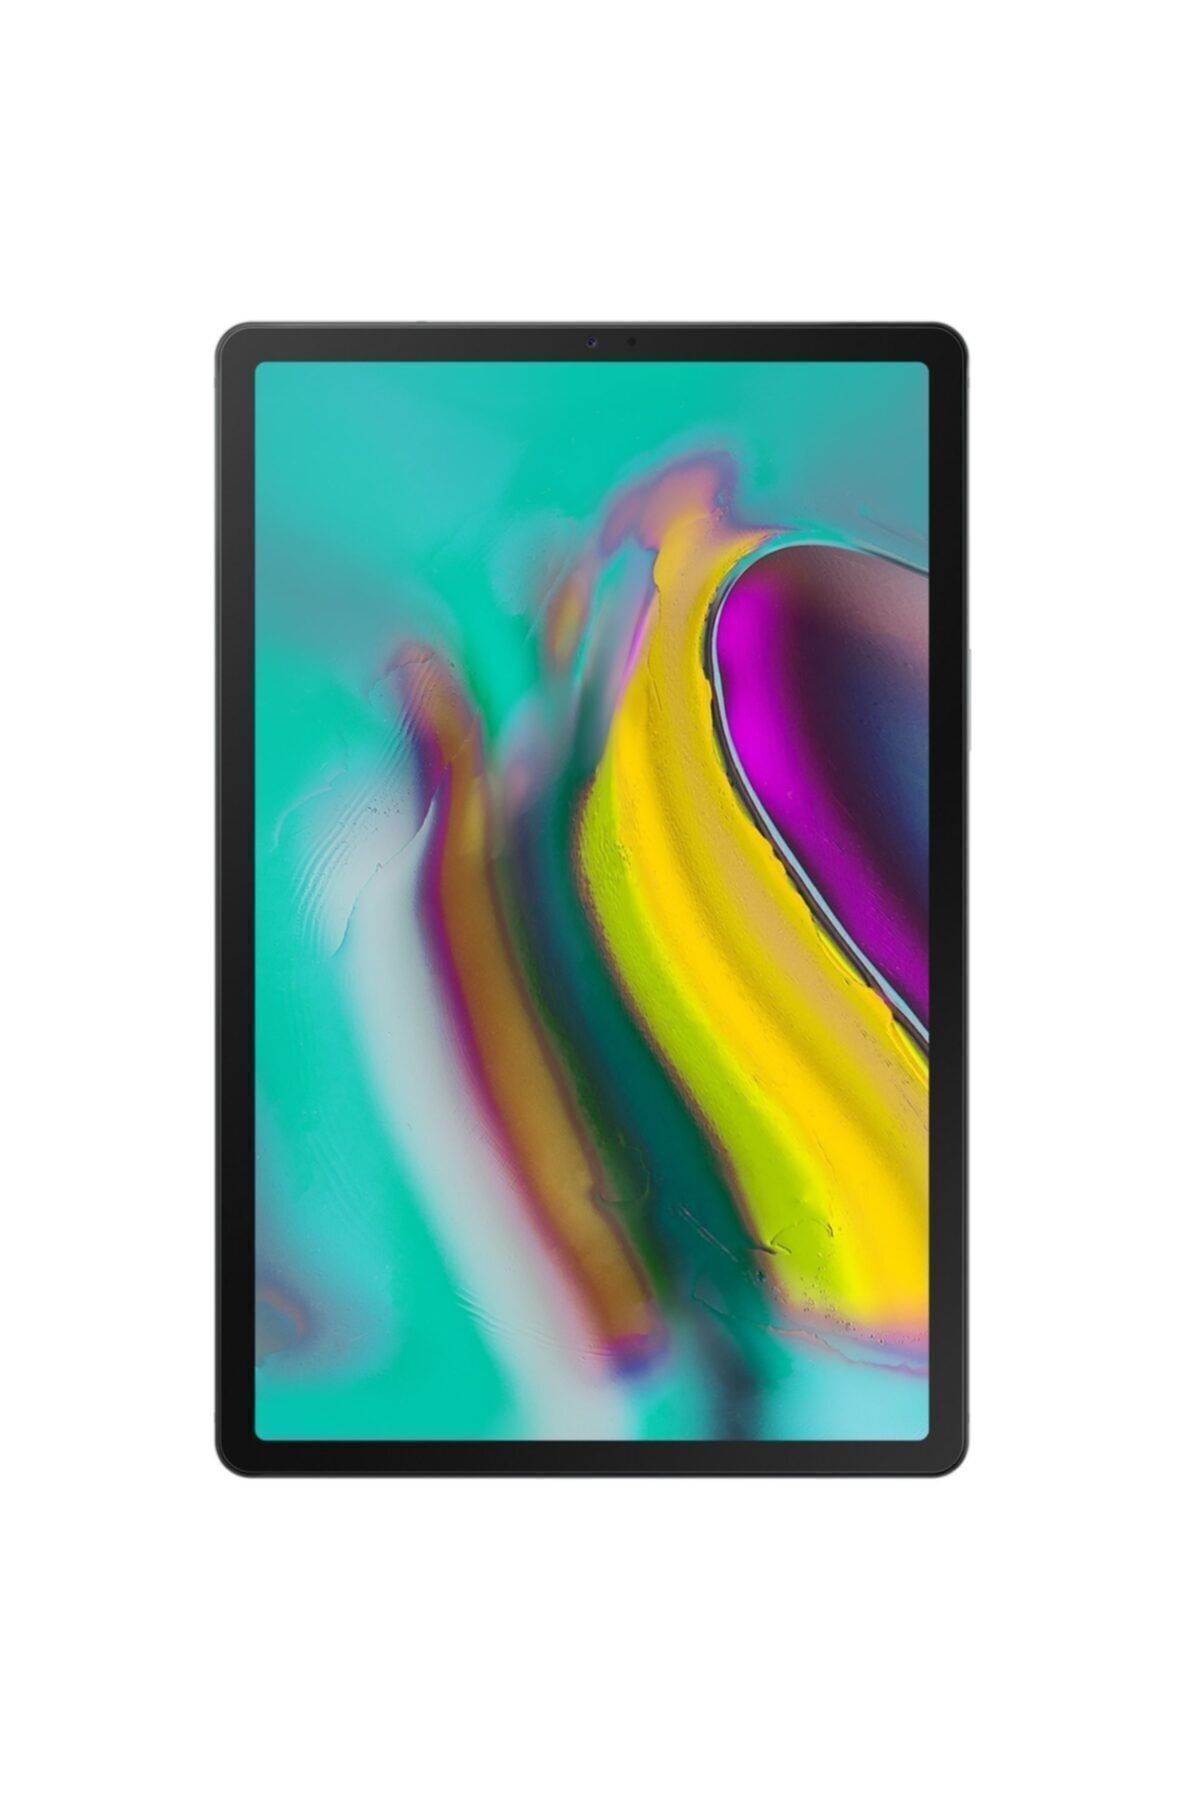 Samsung Galaxy Sm-t720 Tab S5e 4gb 64gb 10.5" 2019 Tablet SM-T720NZDATUR